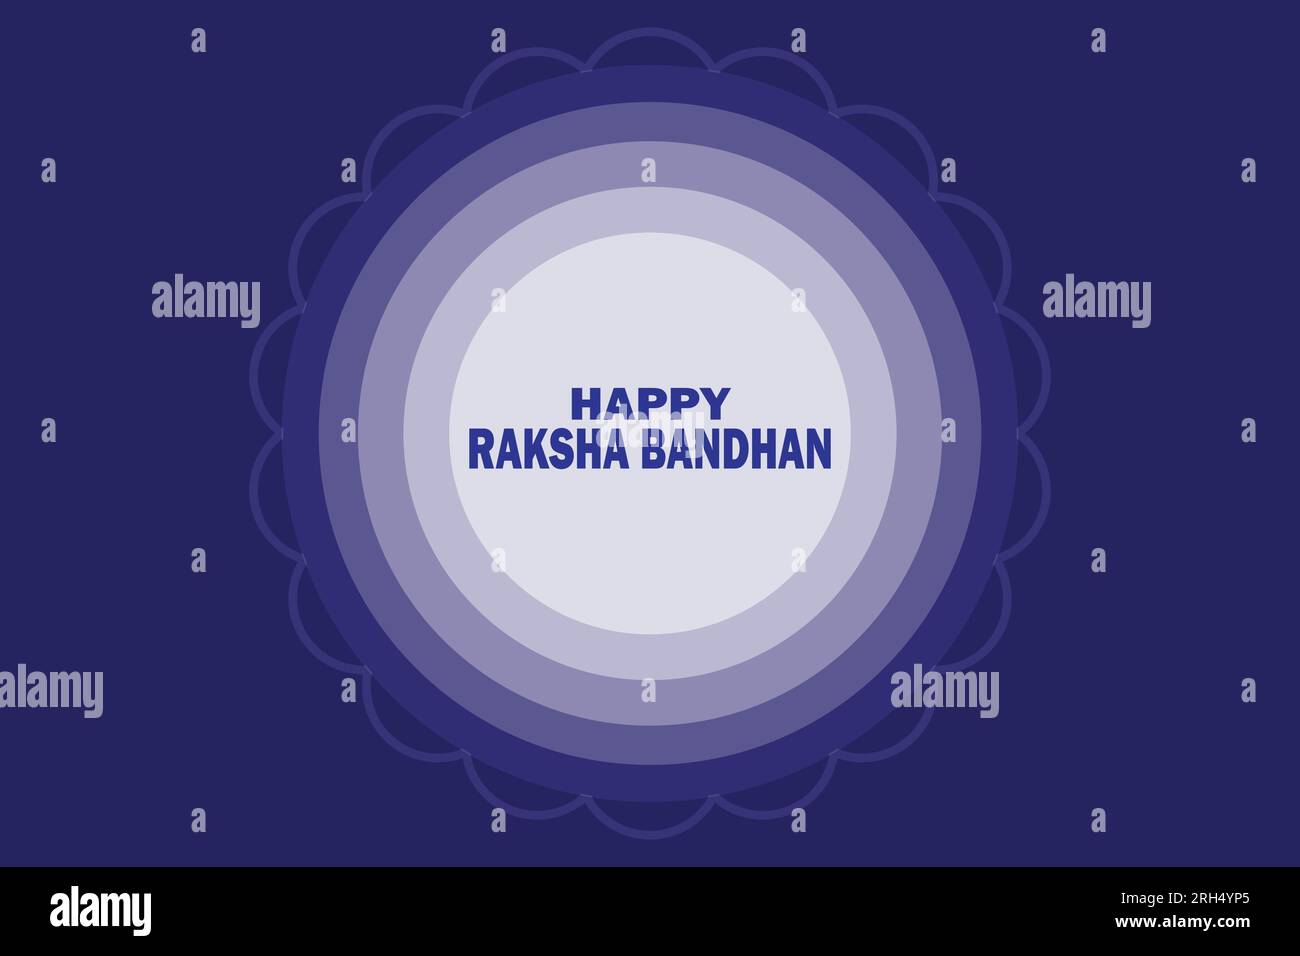 Rakhi Festival Background Design with Creative Illustration - Indian Religious Festival Raksha Bandhan Background Vector Illustration Stock Vector